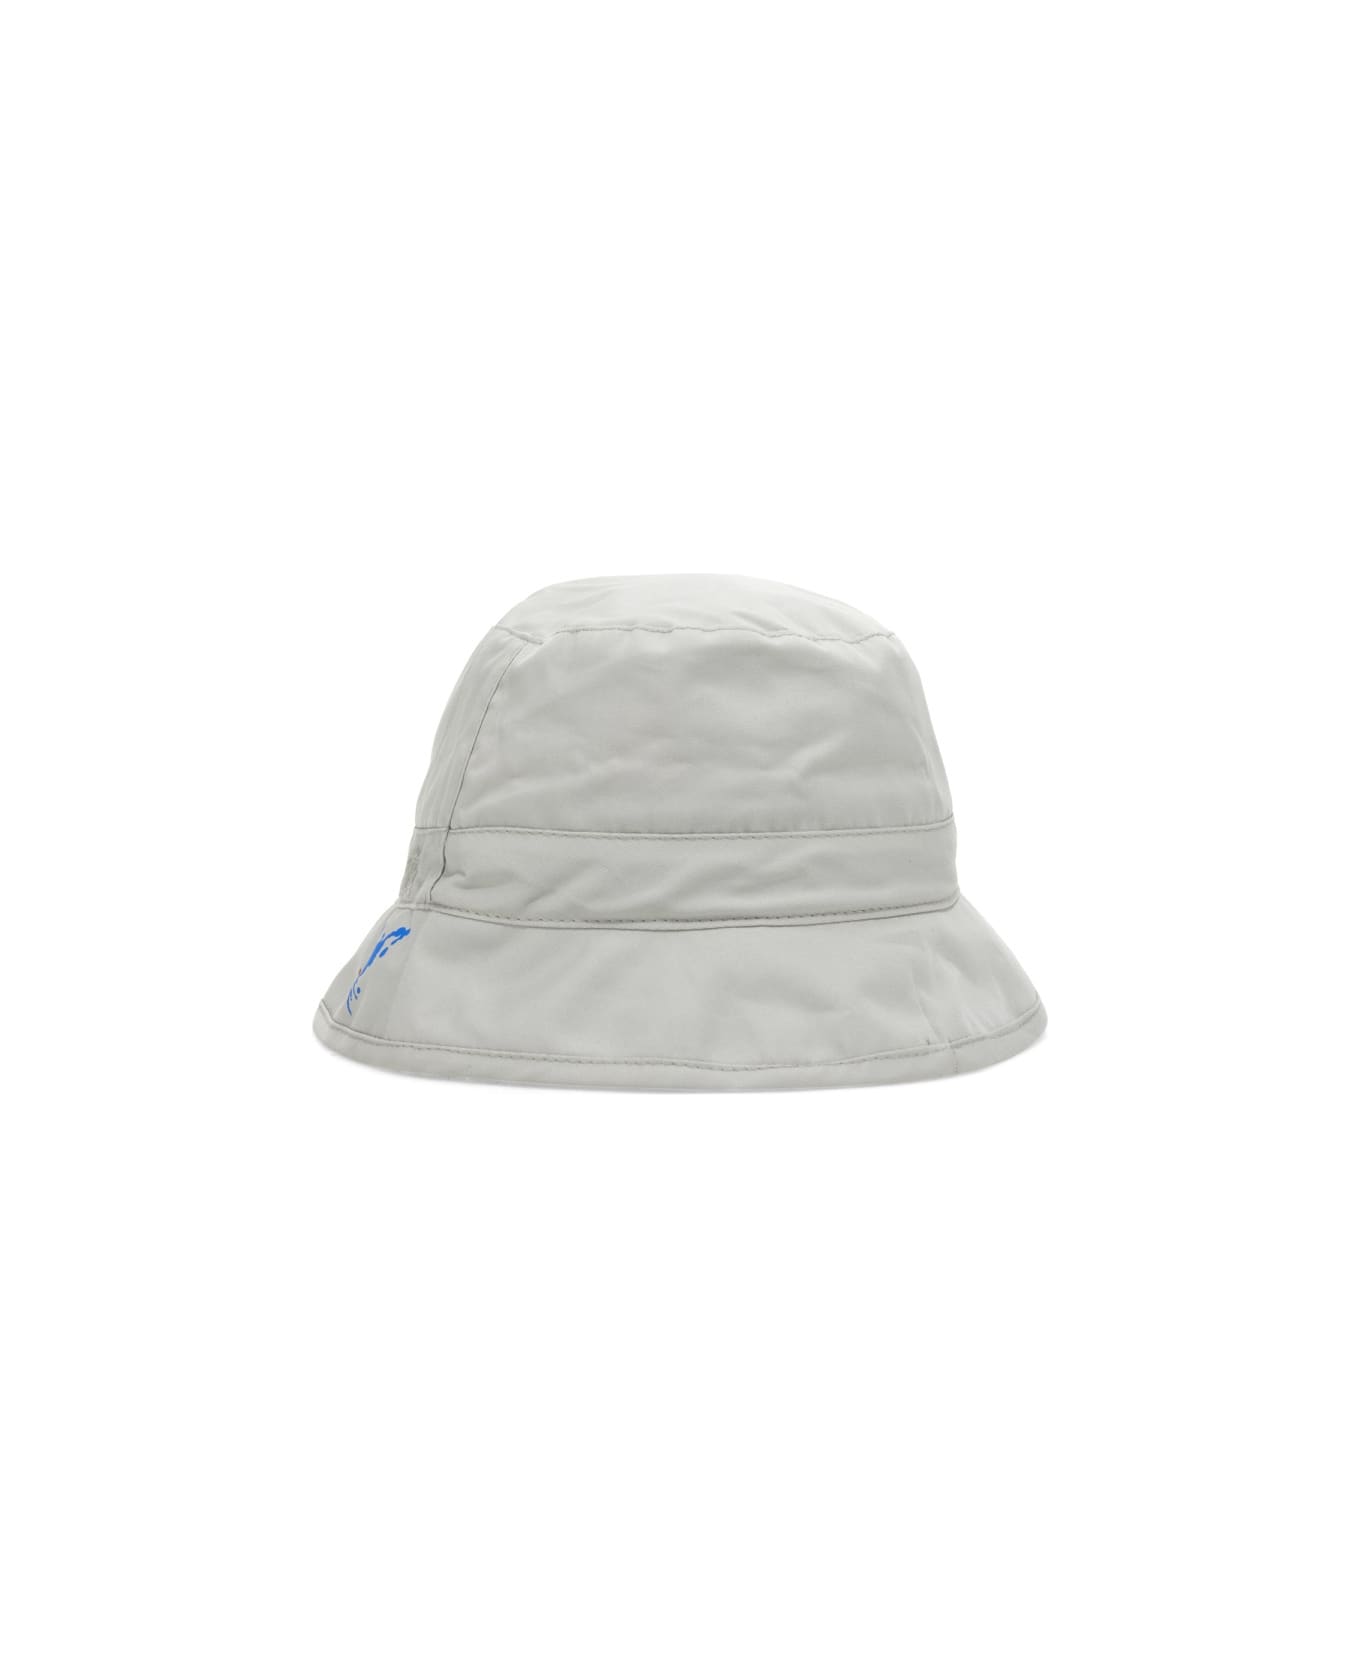 Baracuta Bucket Hat - WHITE